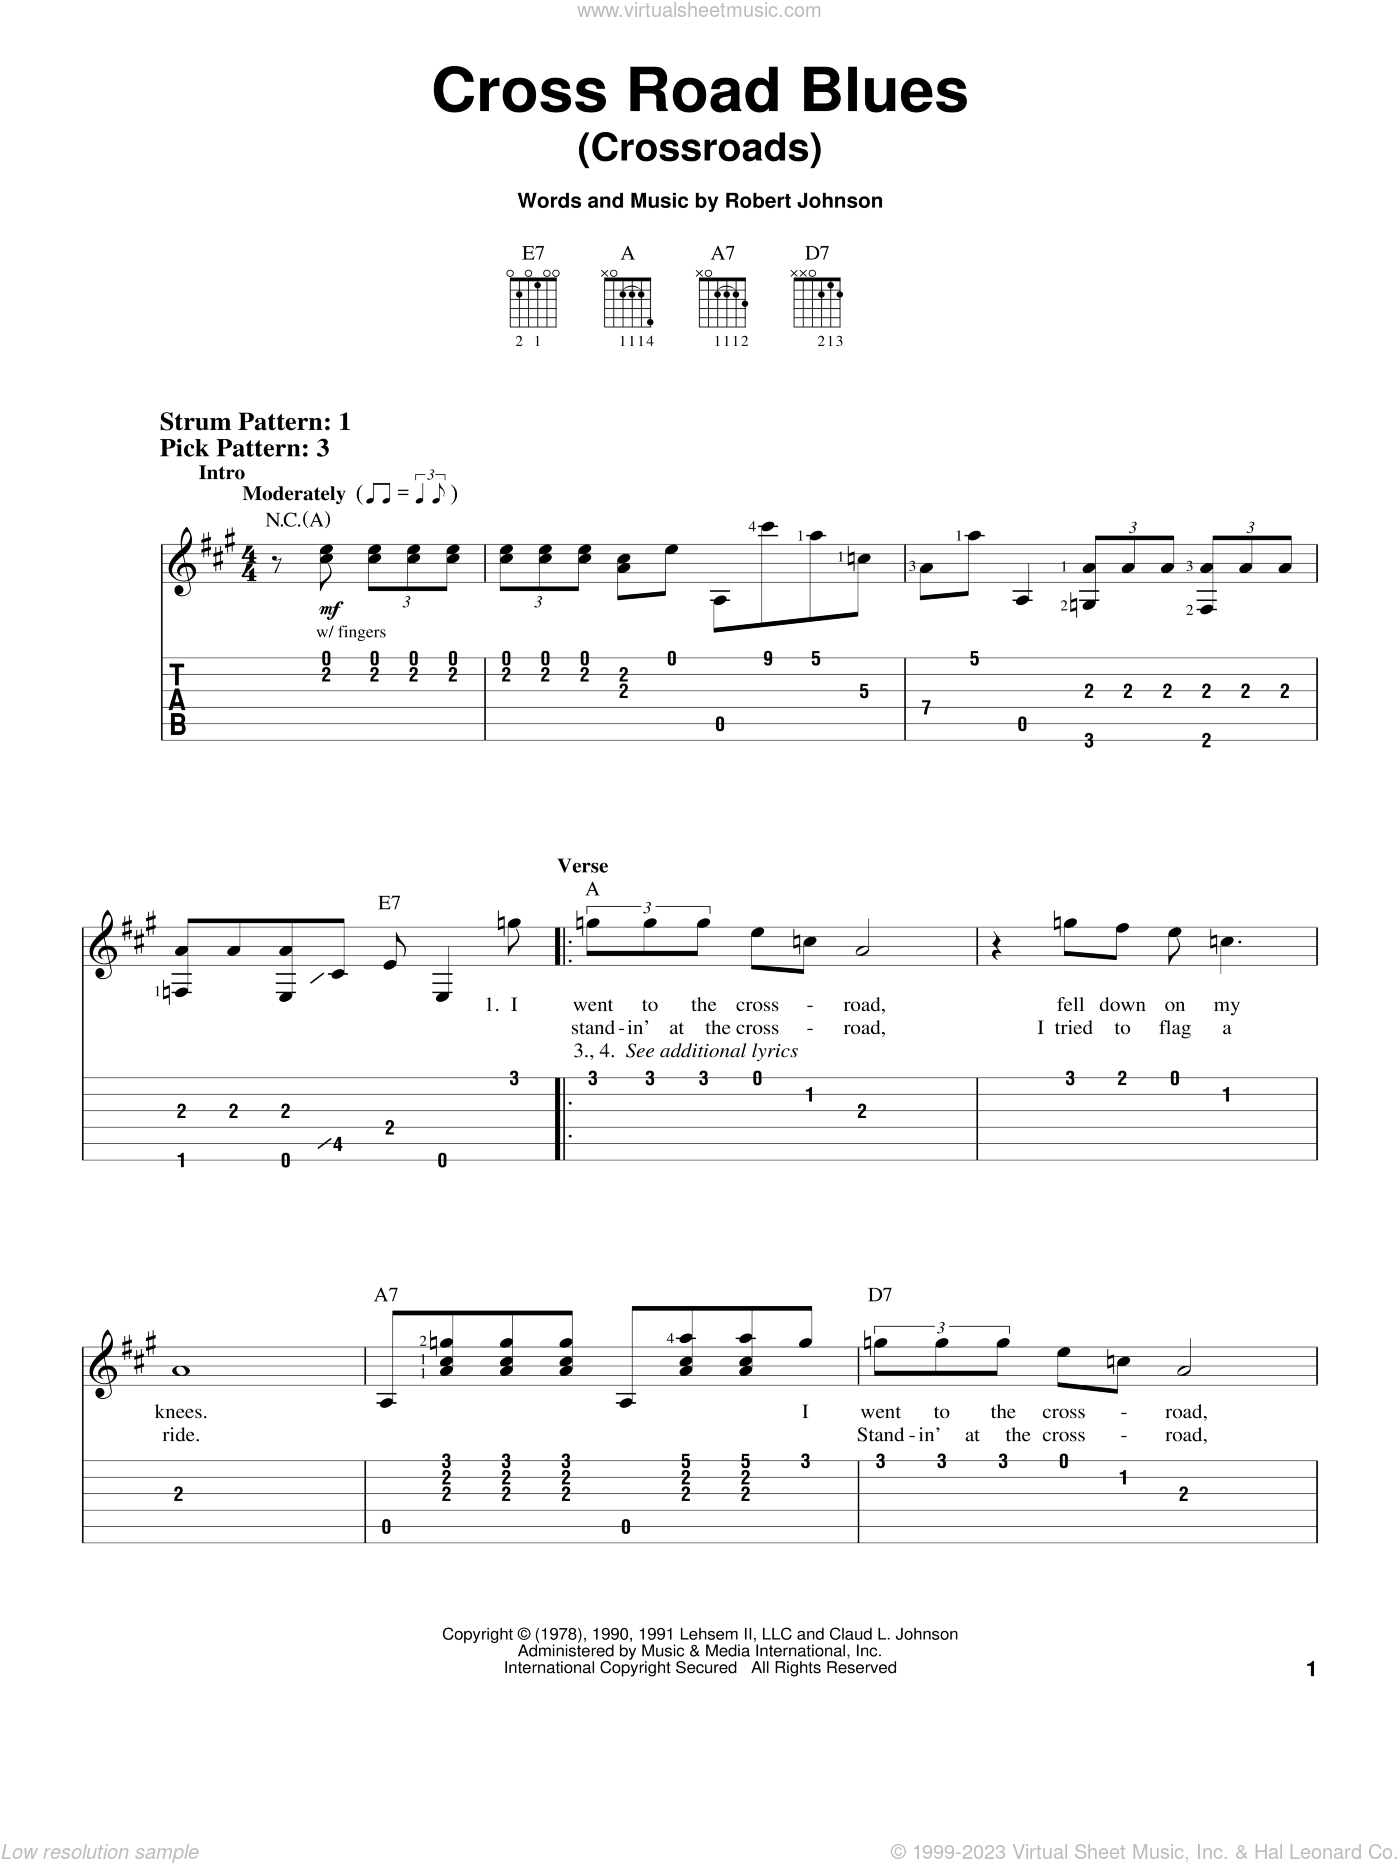 Cross Road Blues (Crossroads)" Sheet Music by Eric Clapton; Robert  Johnson; Cream for Easy Guitar Tab - Sheet Music Now